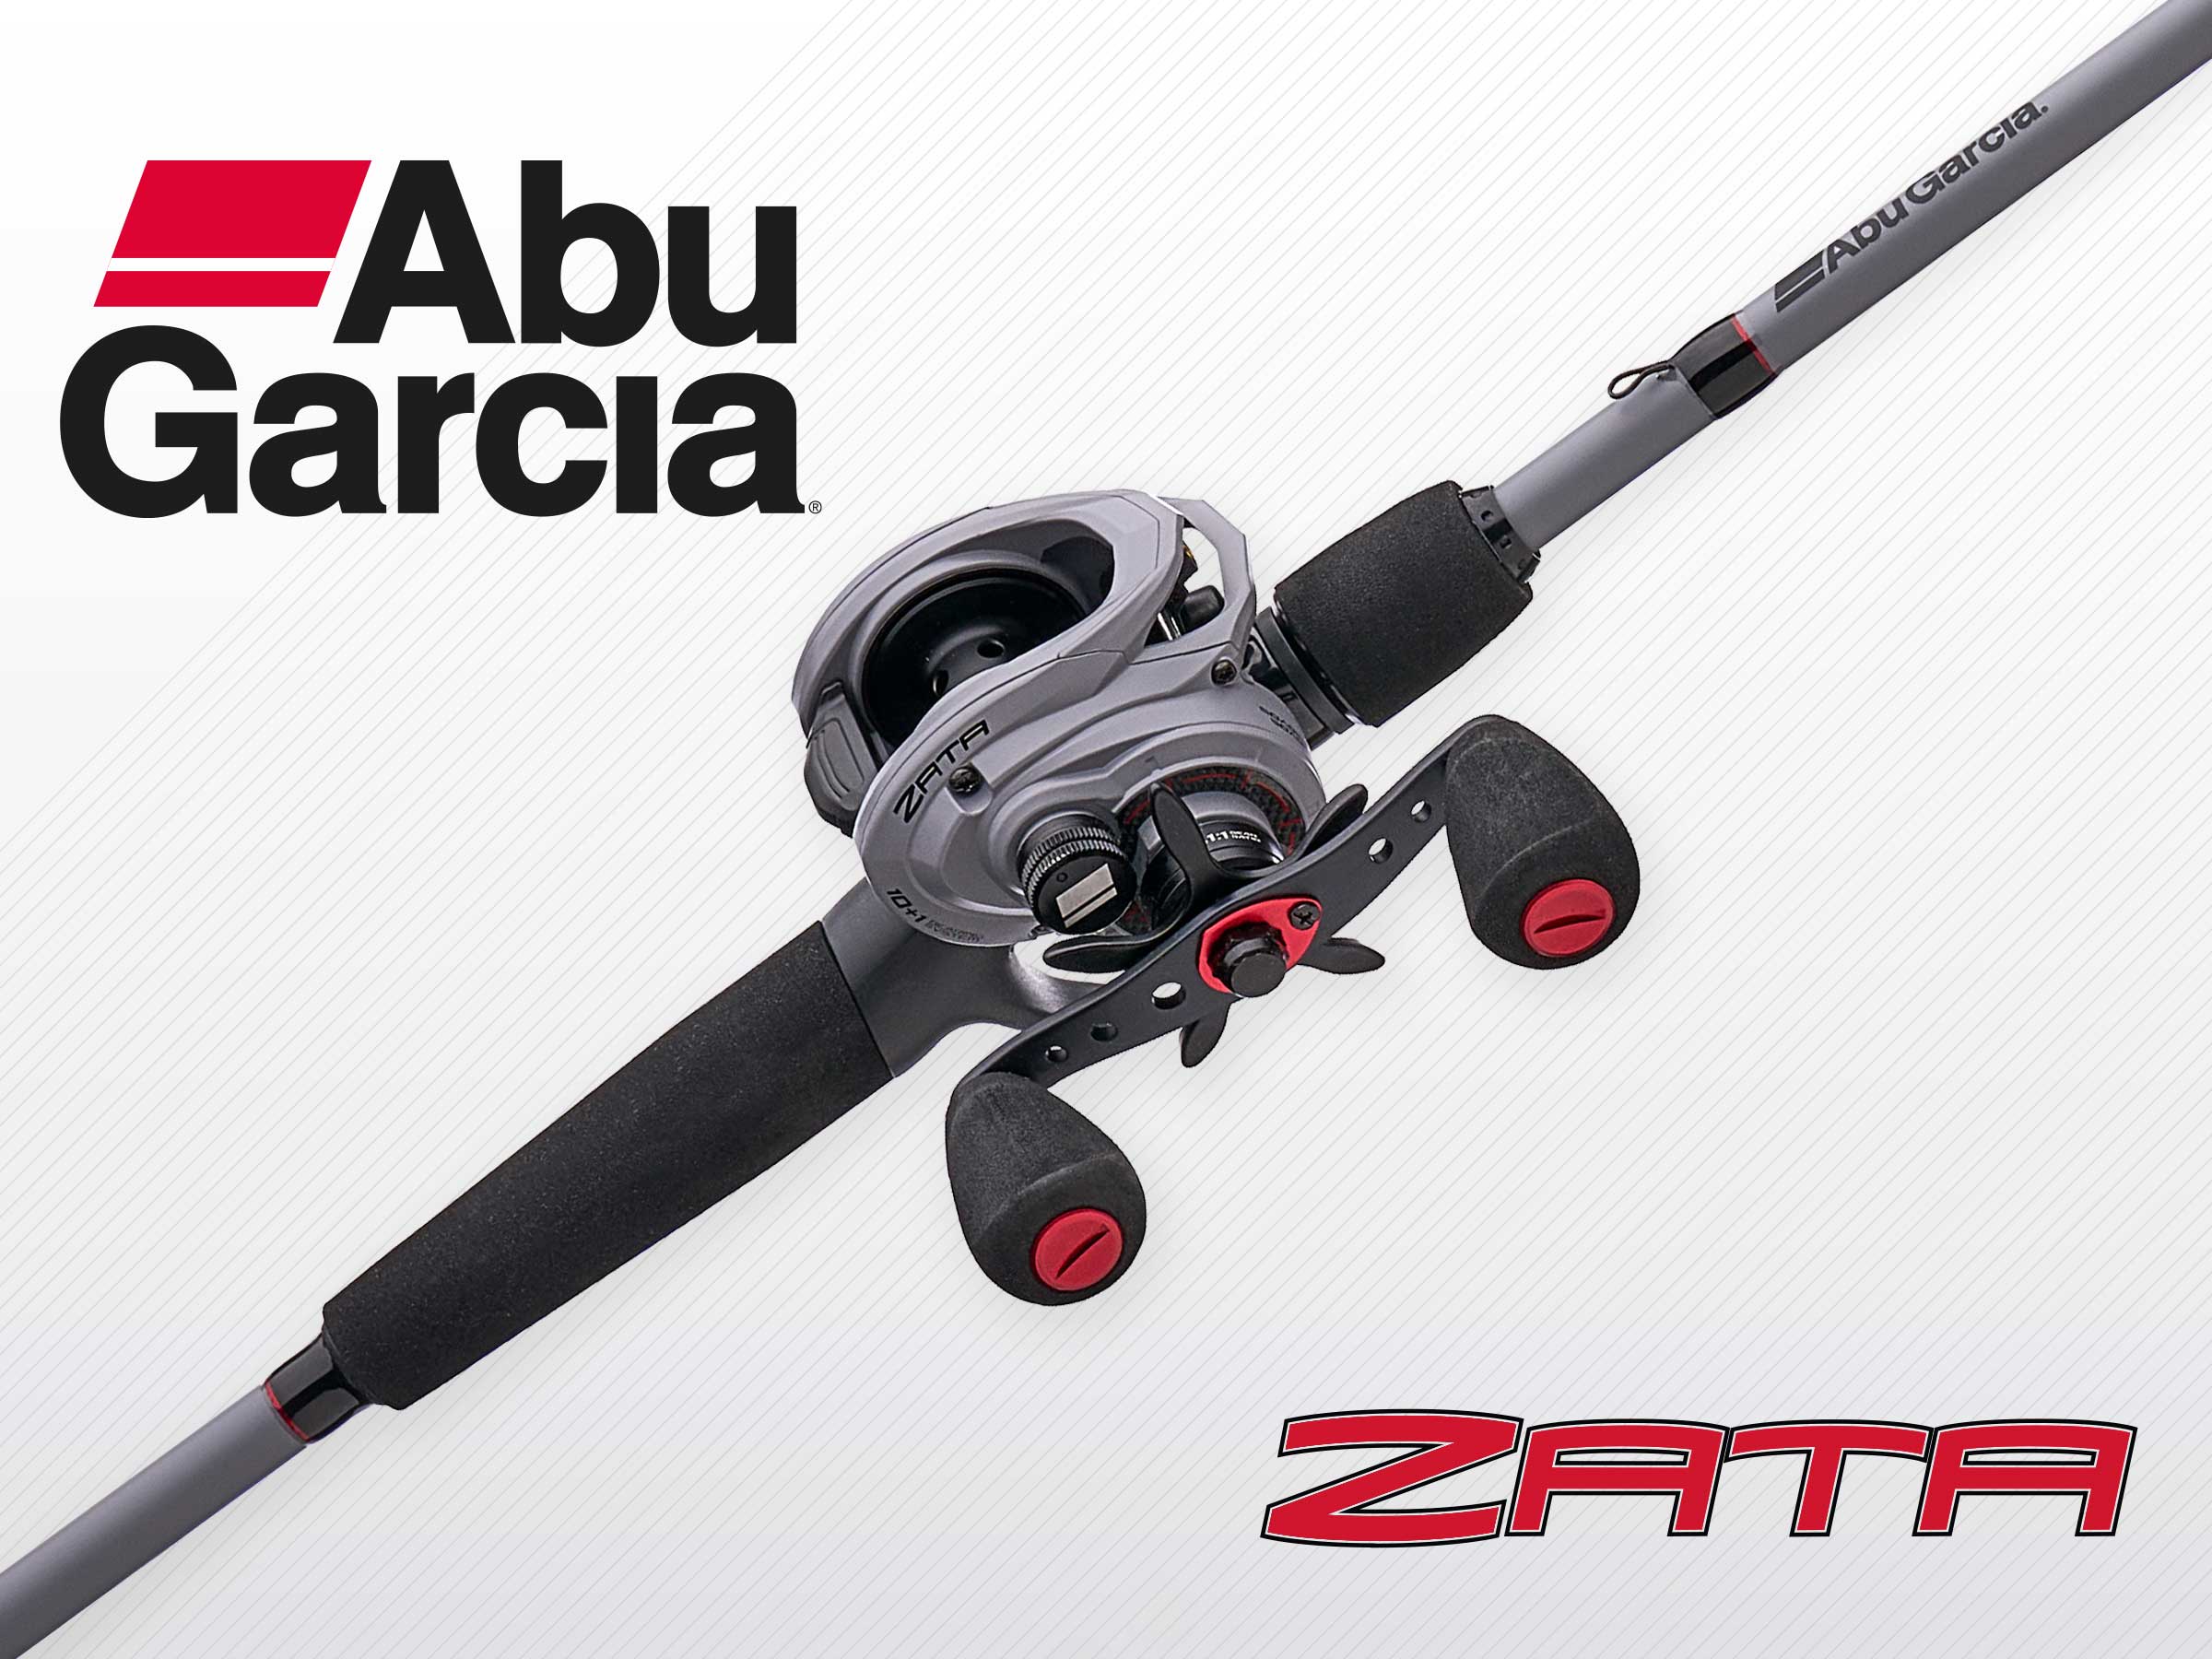 Abu Garcia ZATA Baitcast Combo by Pure Fishing, Inc. - ICAST Fishing